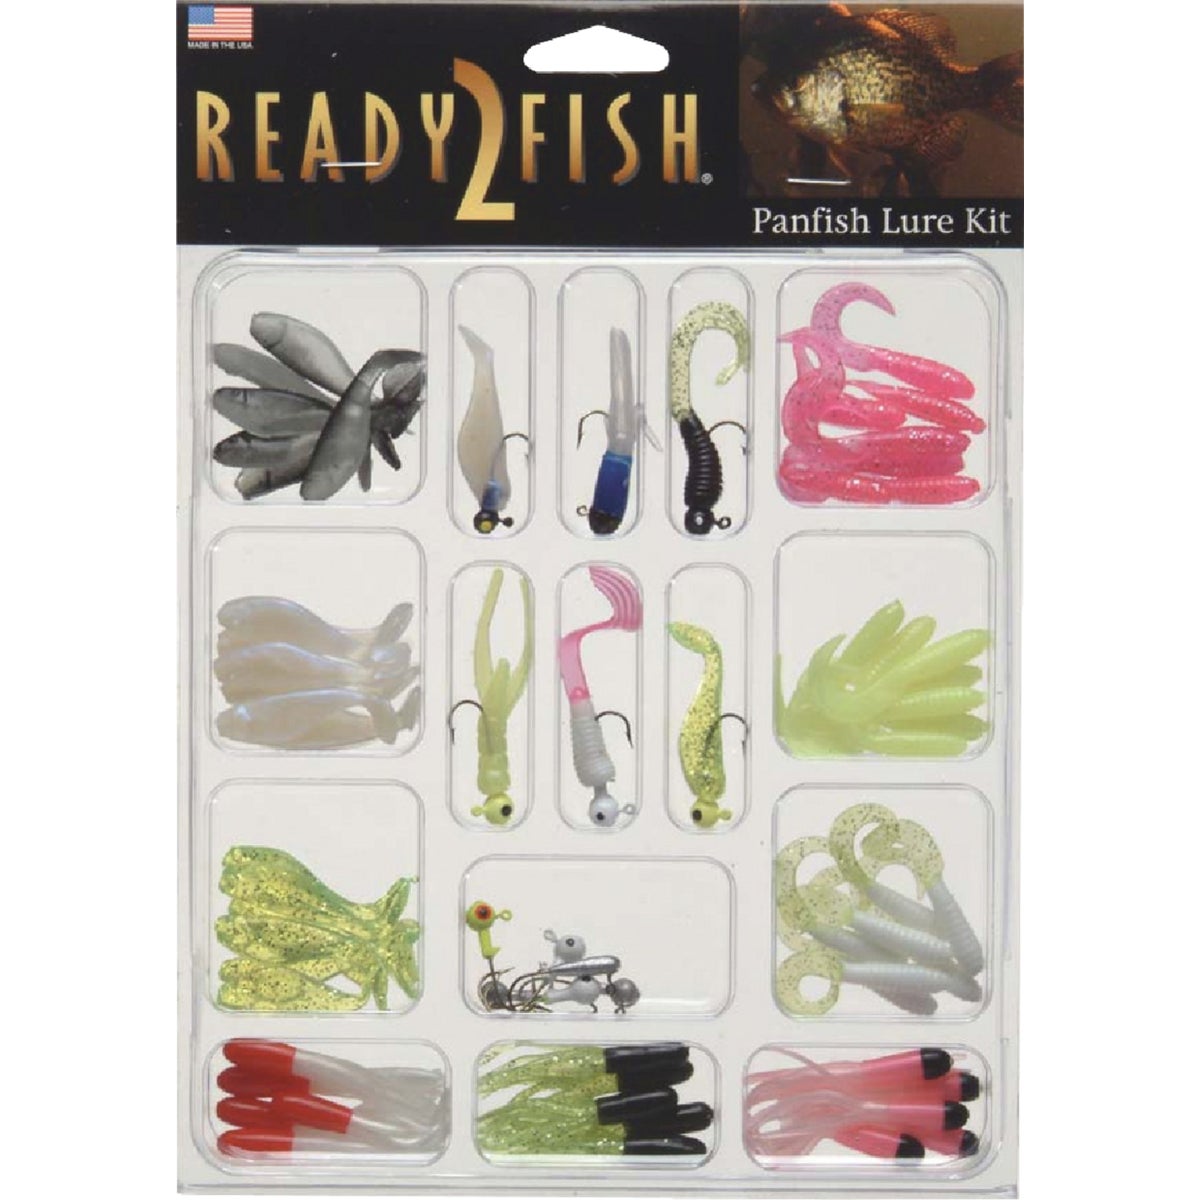 Item 811090, 72-piece, panfish kit with top catching assorted panfish lures.